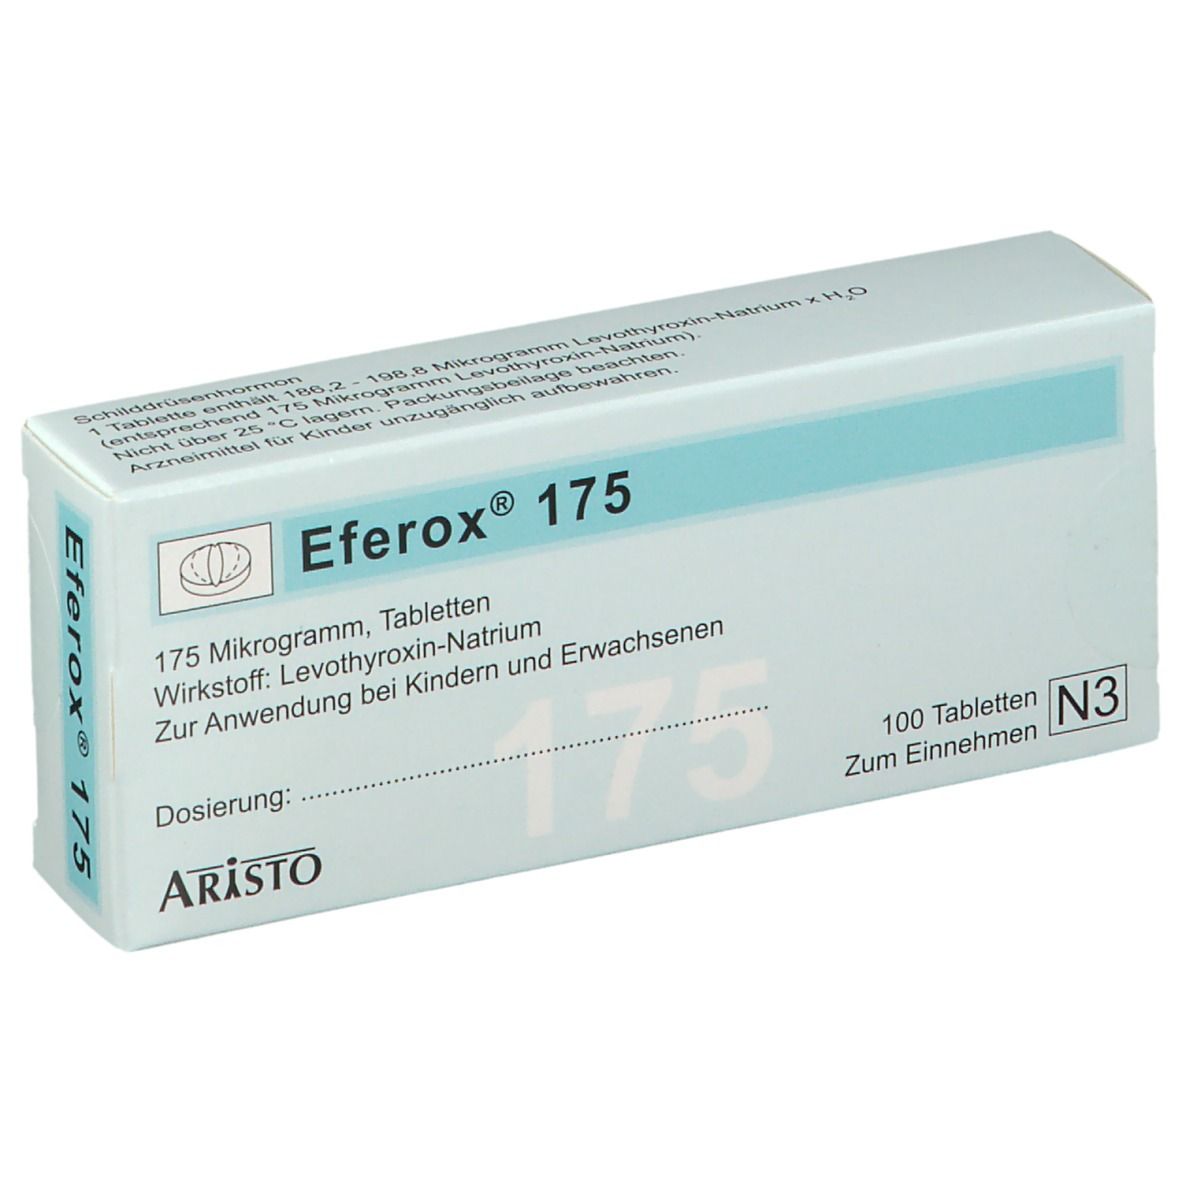 Eferox® 175 µg